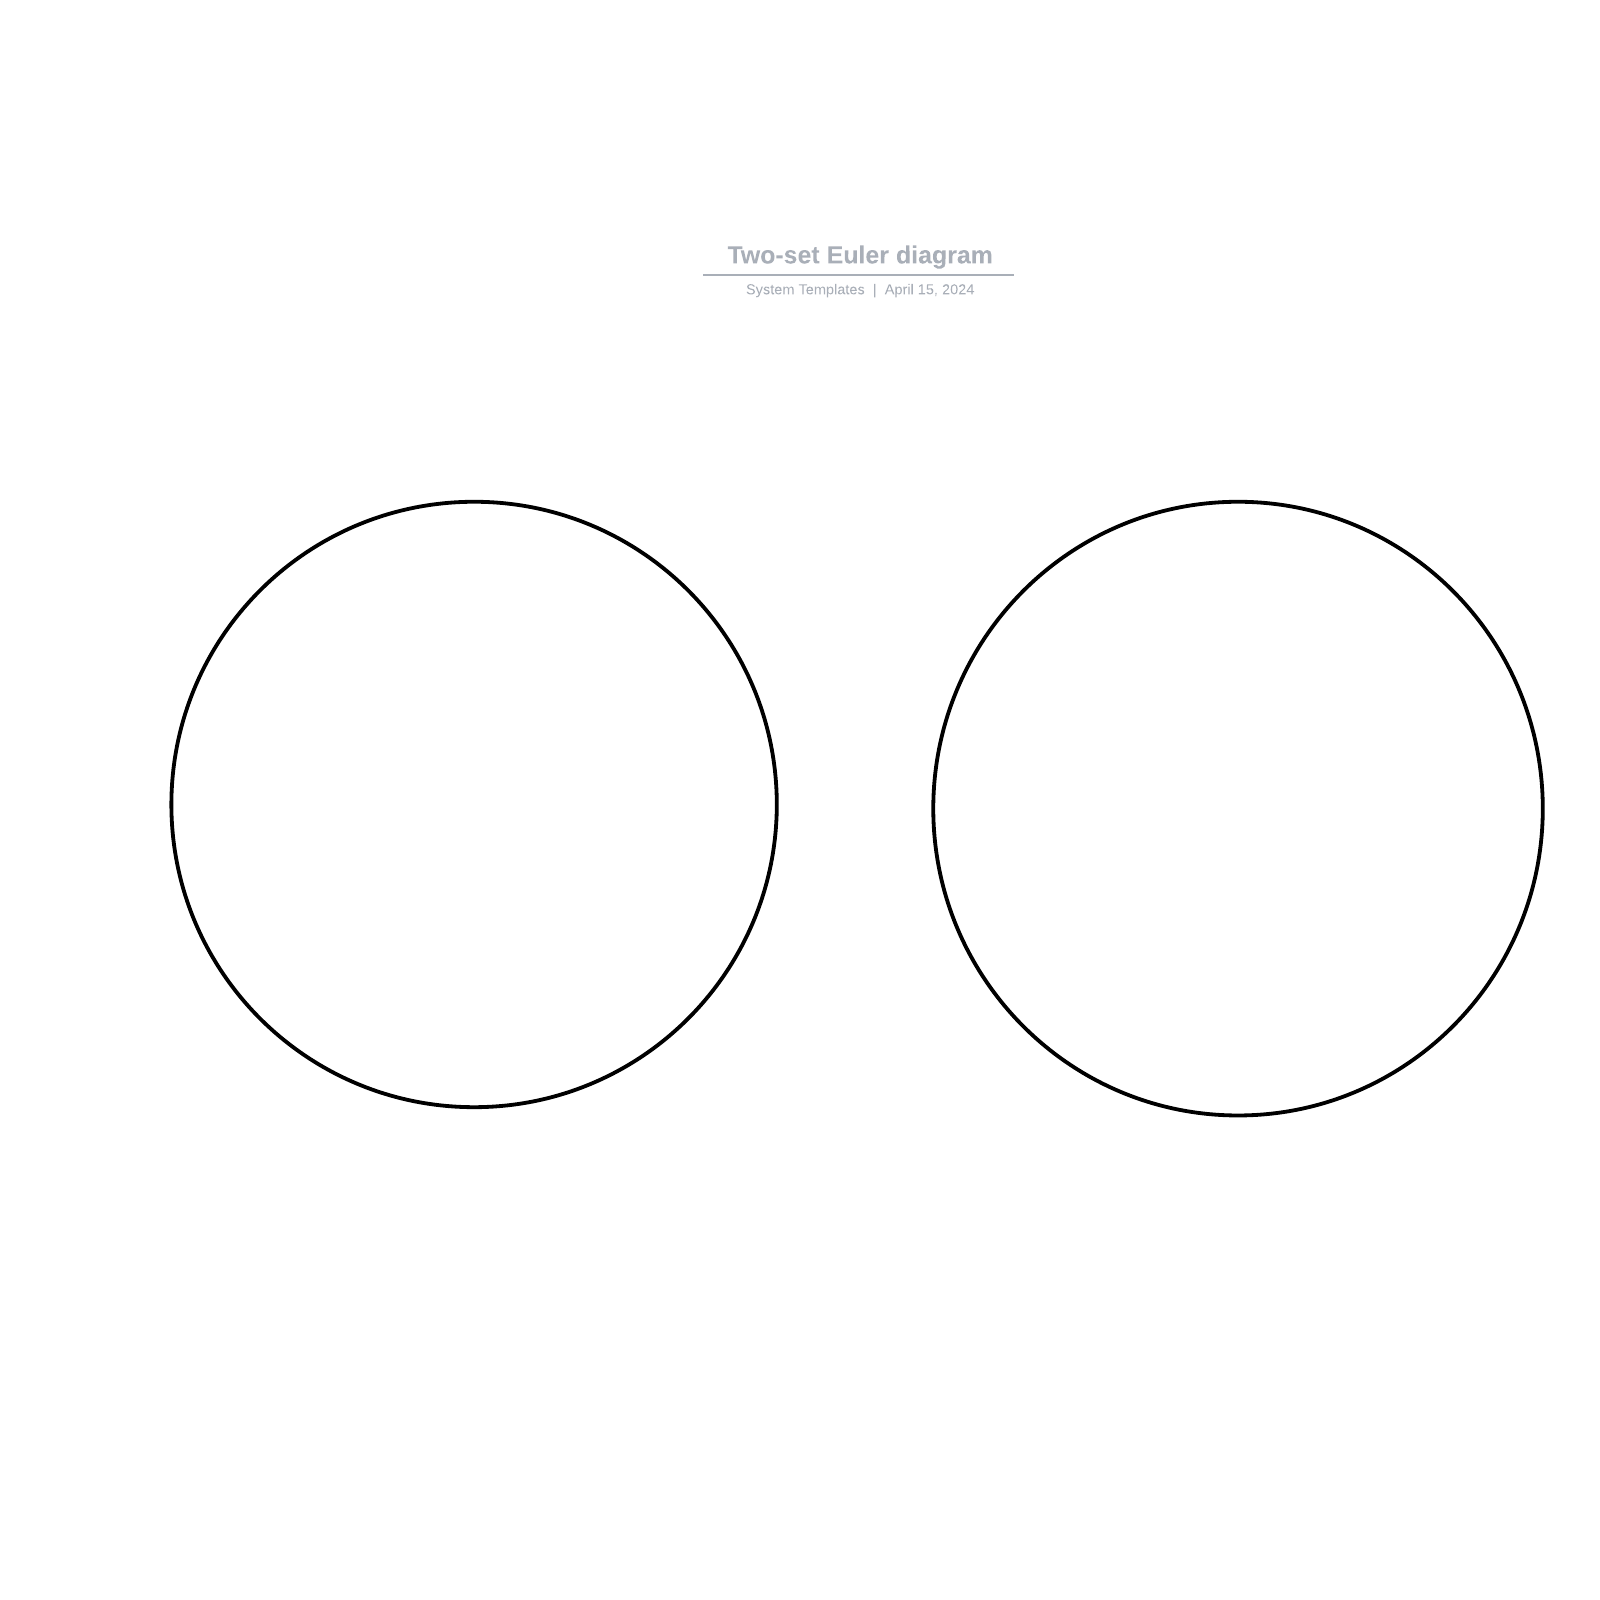 Two-set Euler diagram example